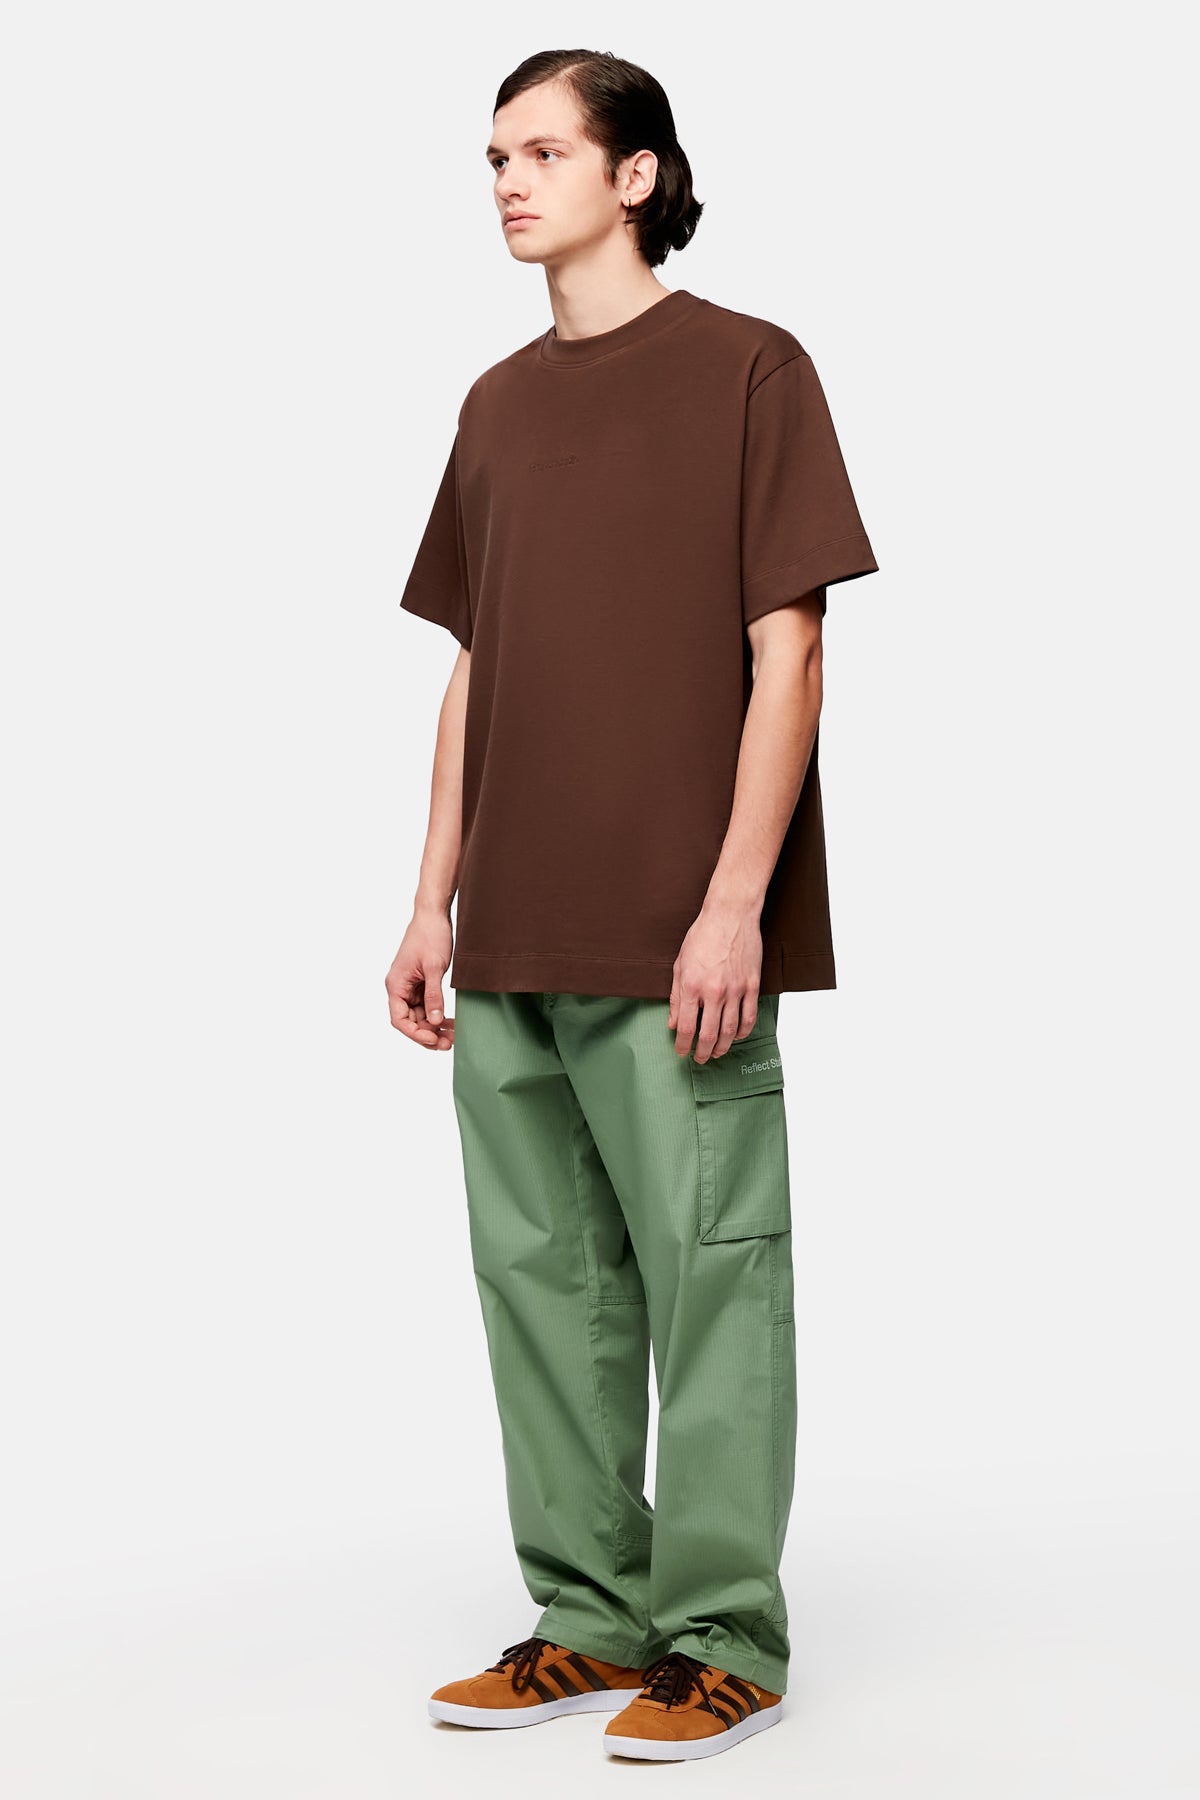 Planet T-Shirt - Dark Brown